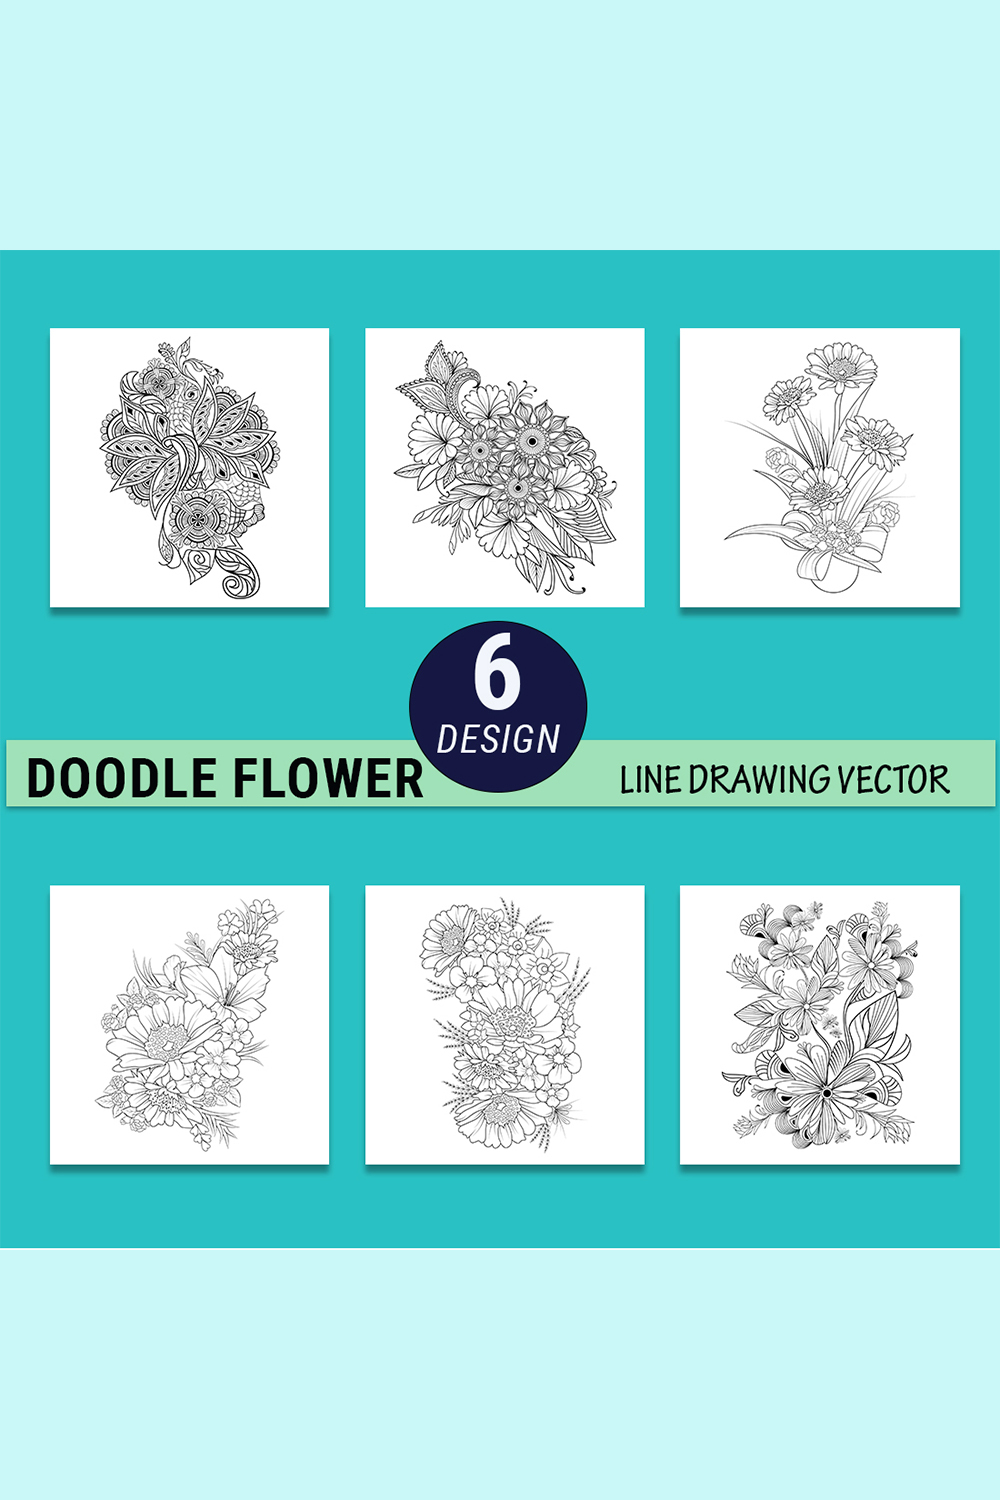 zentangle art tattoos, easy flower doodle illustration, doodle flower drawing, simple bouquet doodle flower drawing pinterest preview image.